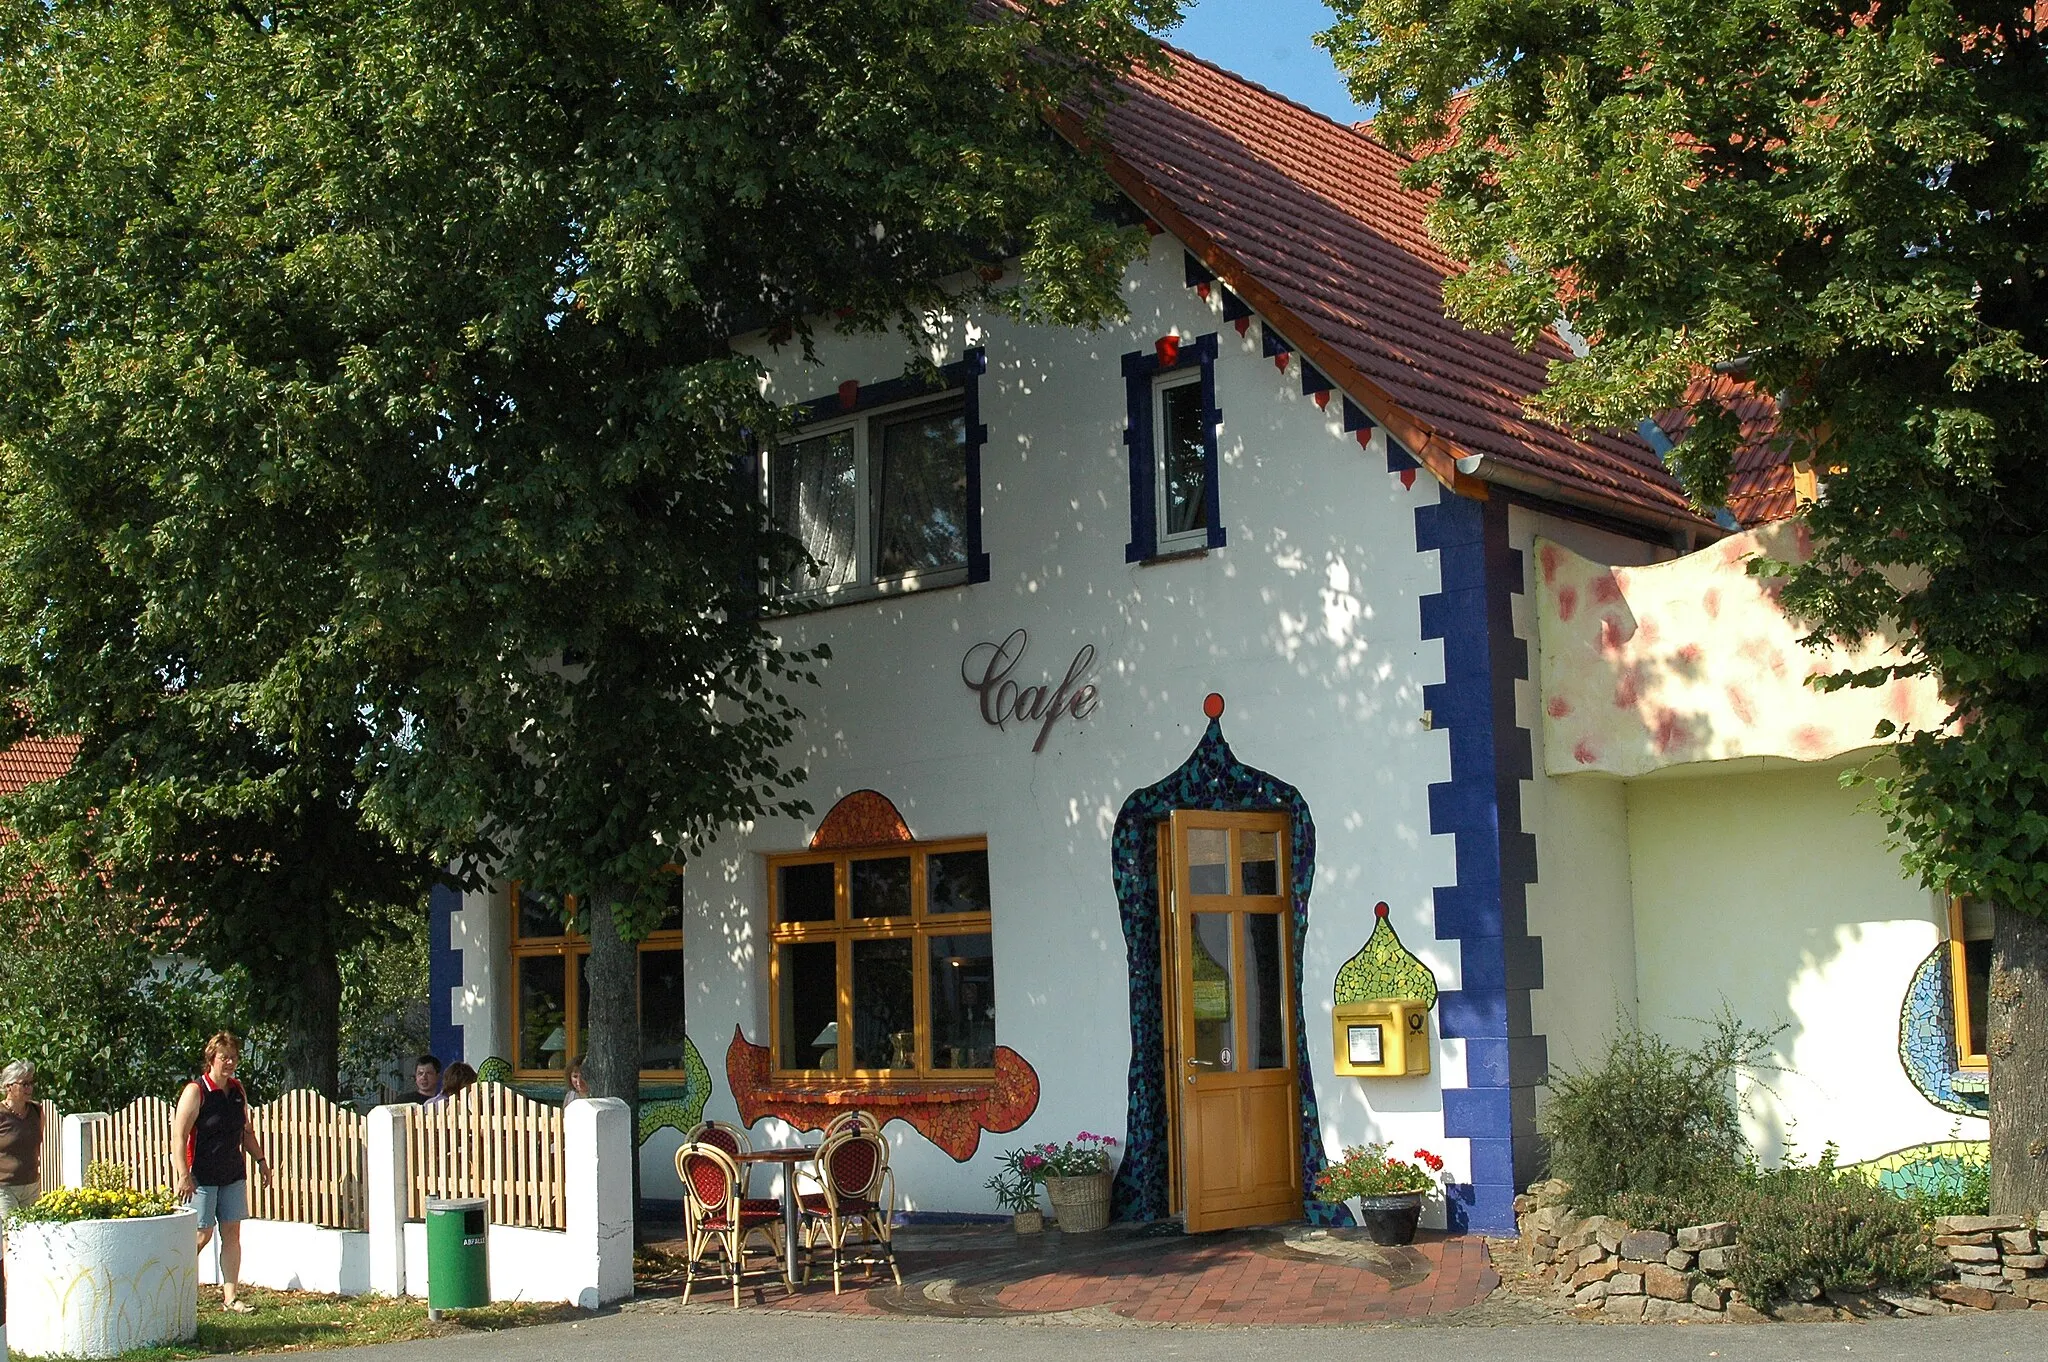 Photo showing: Anziehungspunkt in Stemwede-Oppenwehe: Flaniercafe „HundertSinne“, gestaltet im Stil F. Hundertwassers (vgl. www.hundertsinne.de)